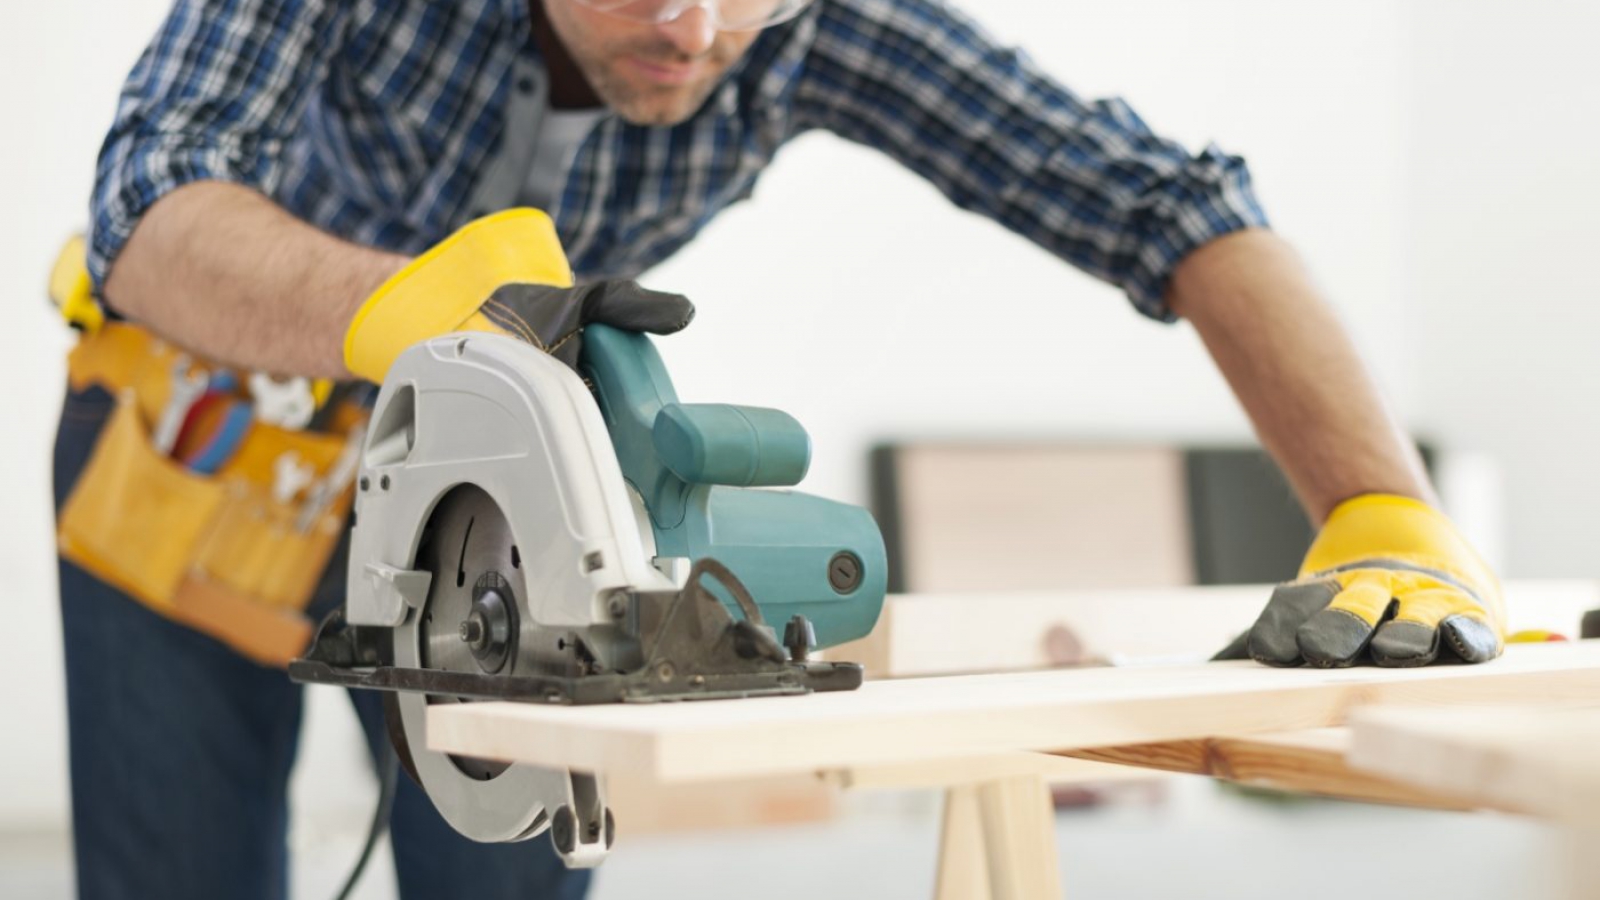 carpenter-working-with-circular-saw-min